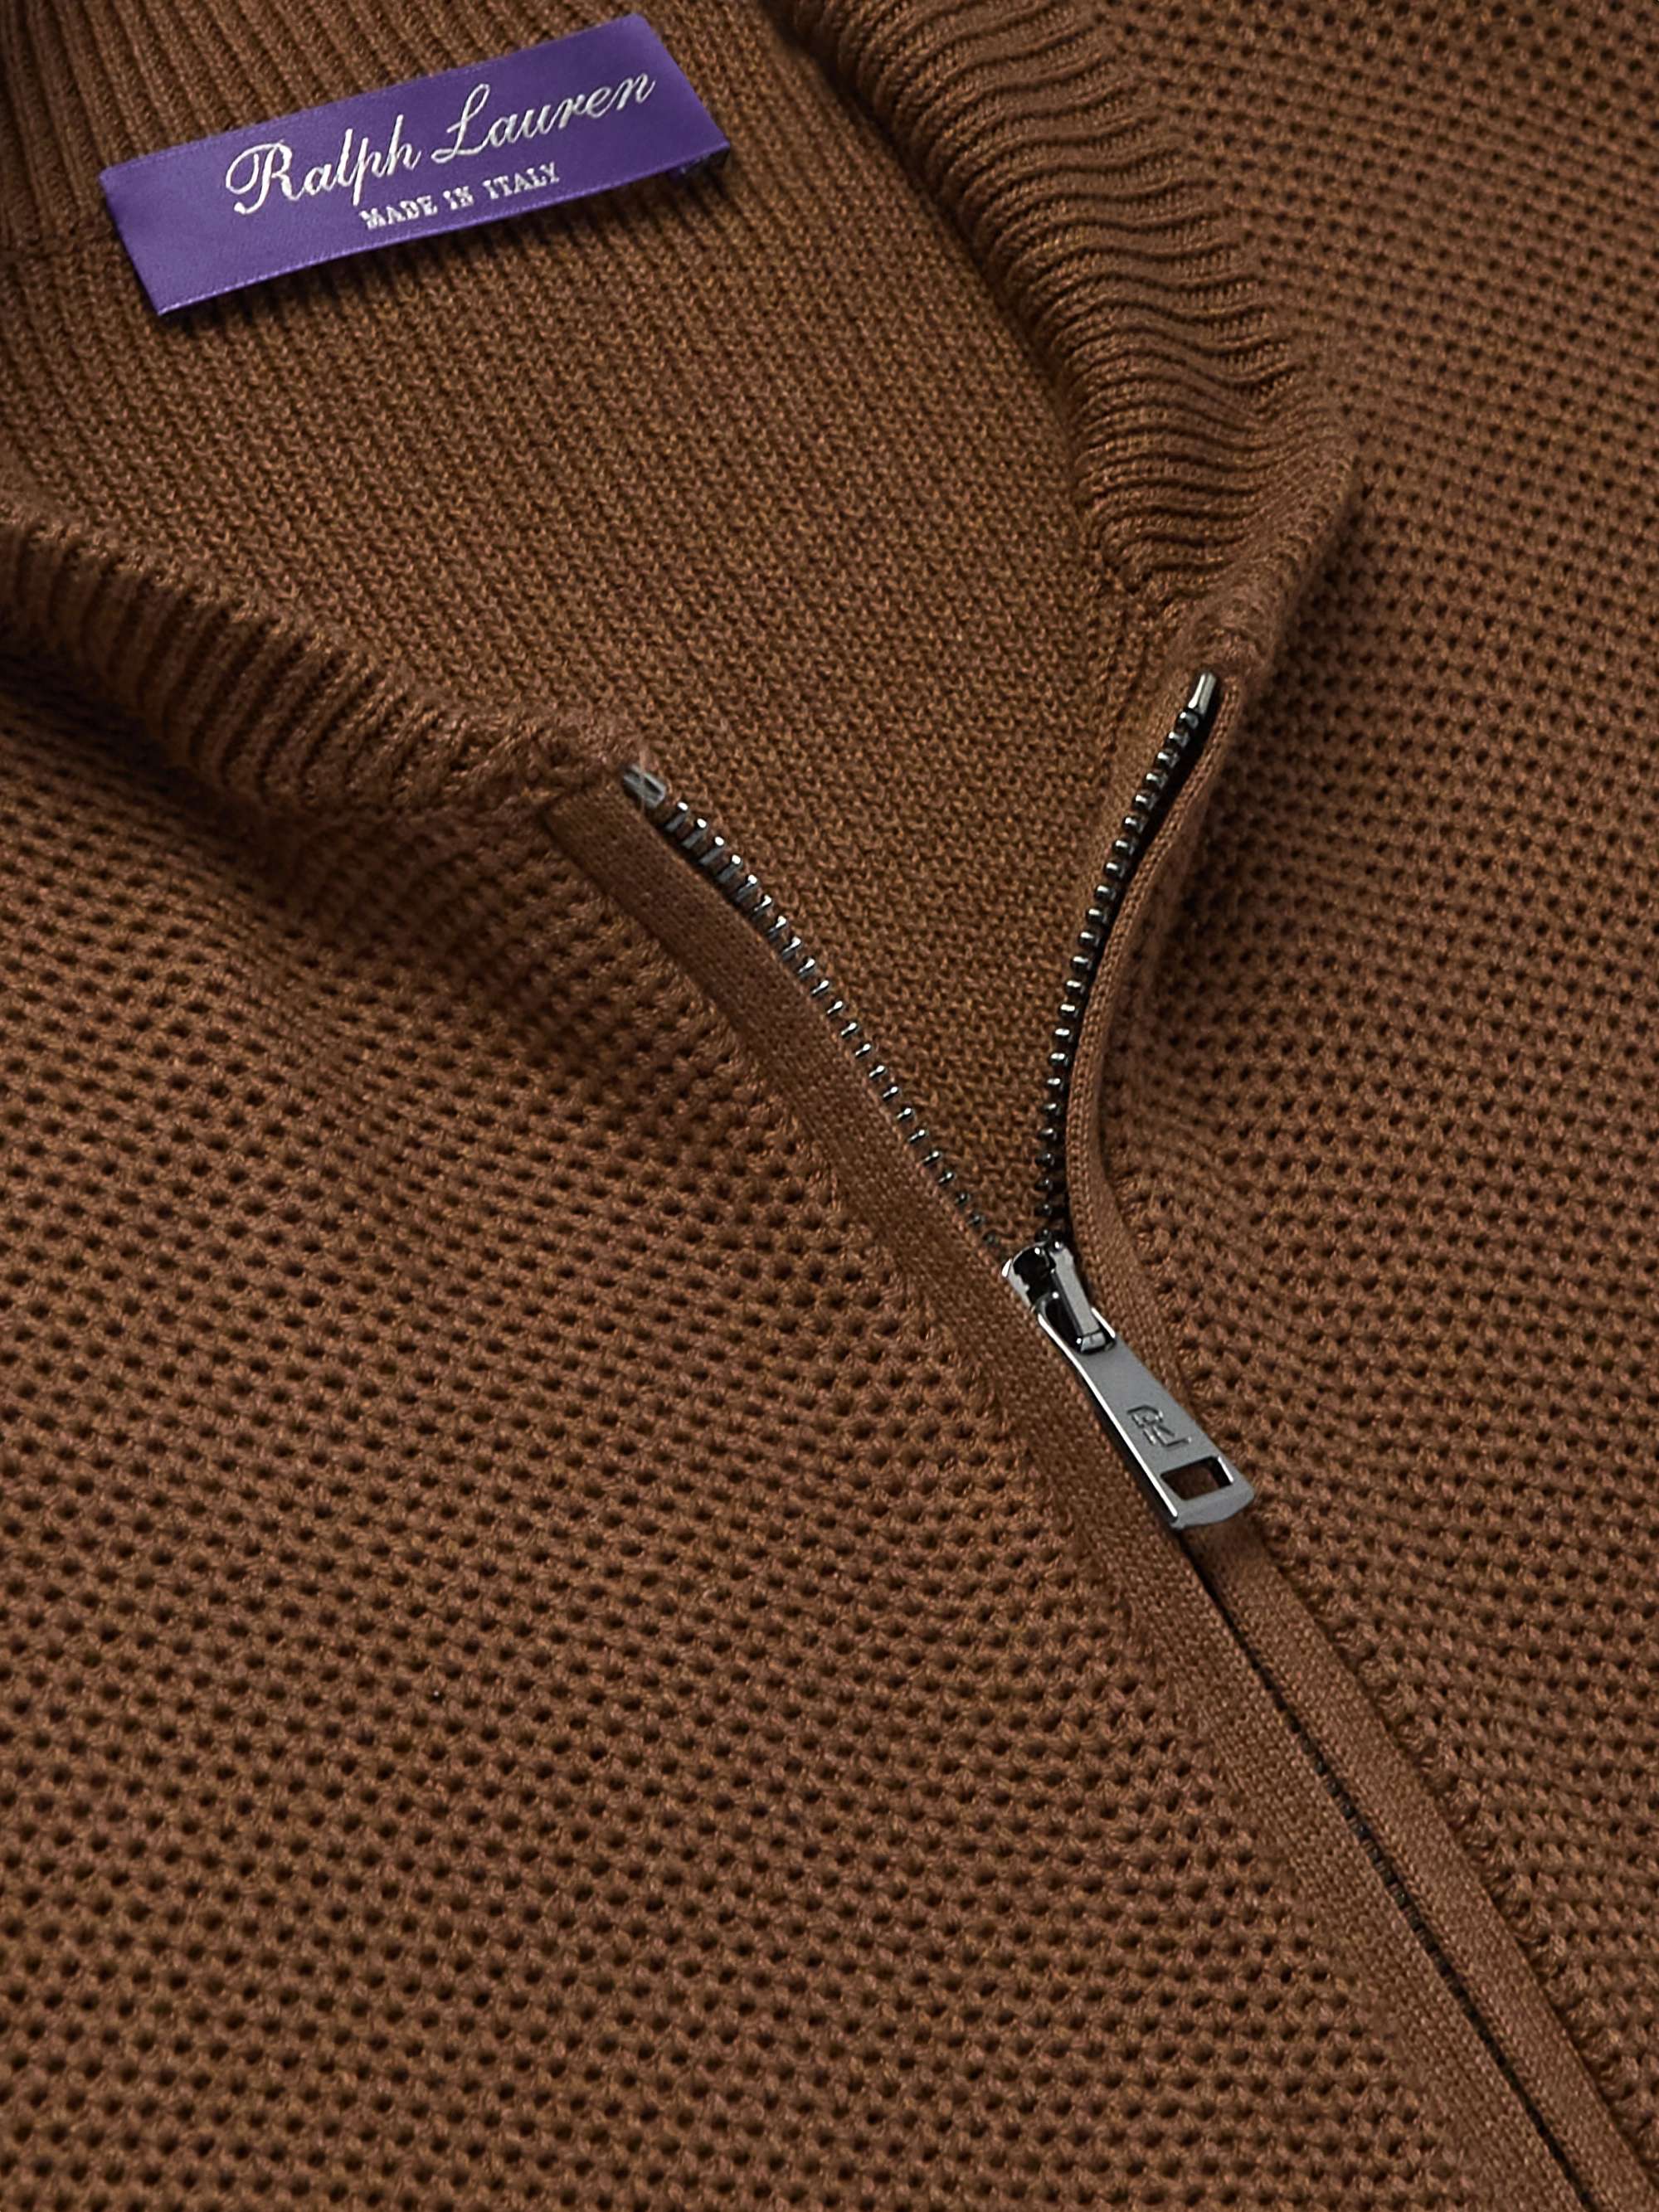 RALPH LAUREN PURPLE LABEL Silk and Cotton-Blend Zip-Up Sweater